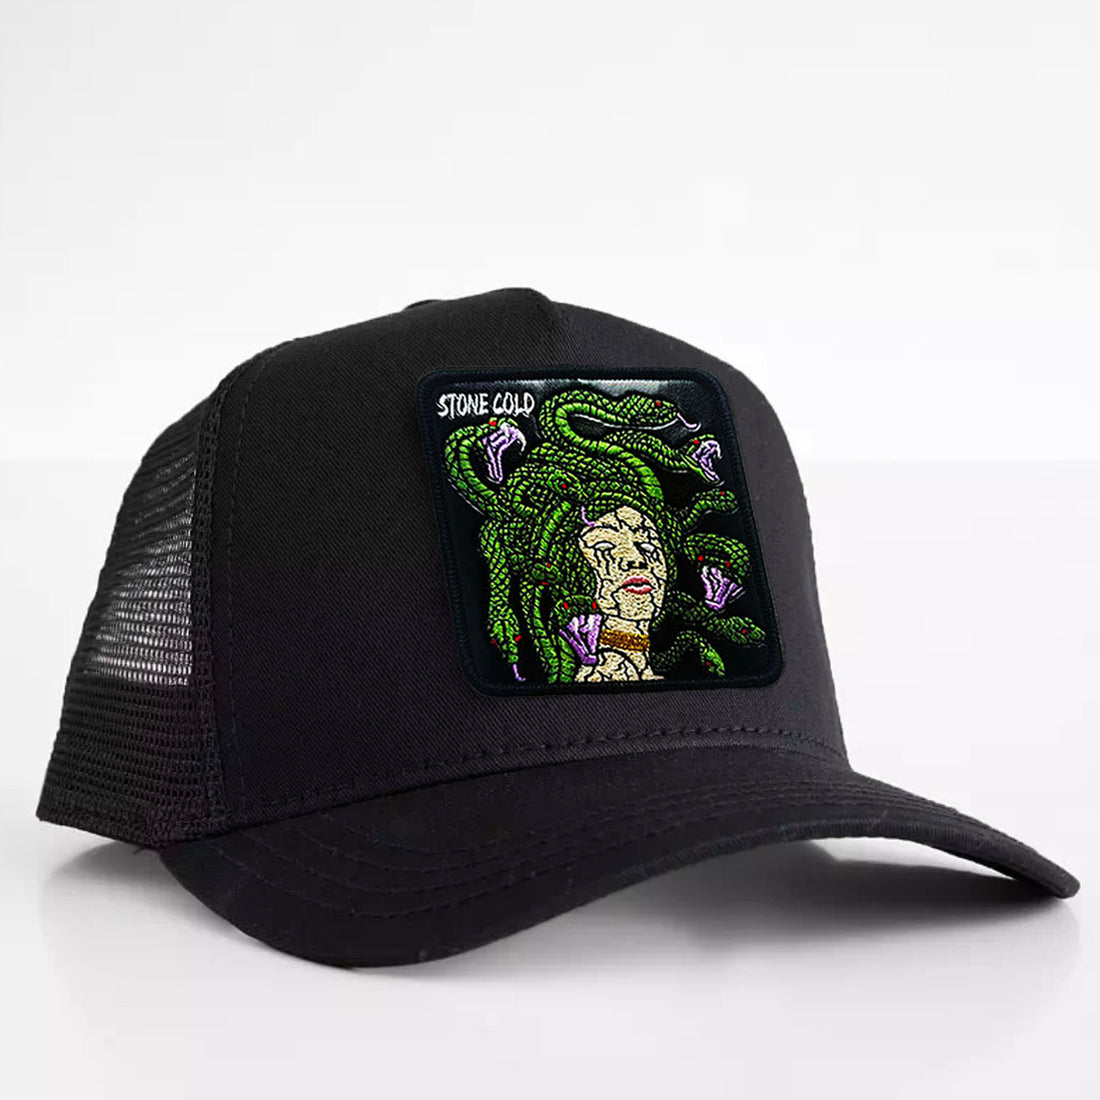 Medusa - "Stone cold" Trucker Hat